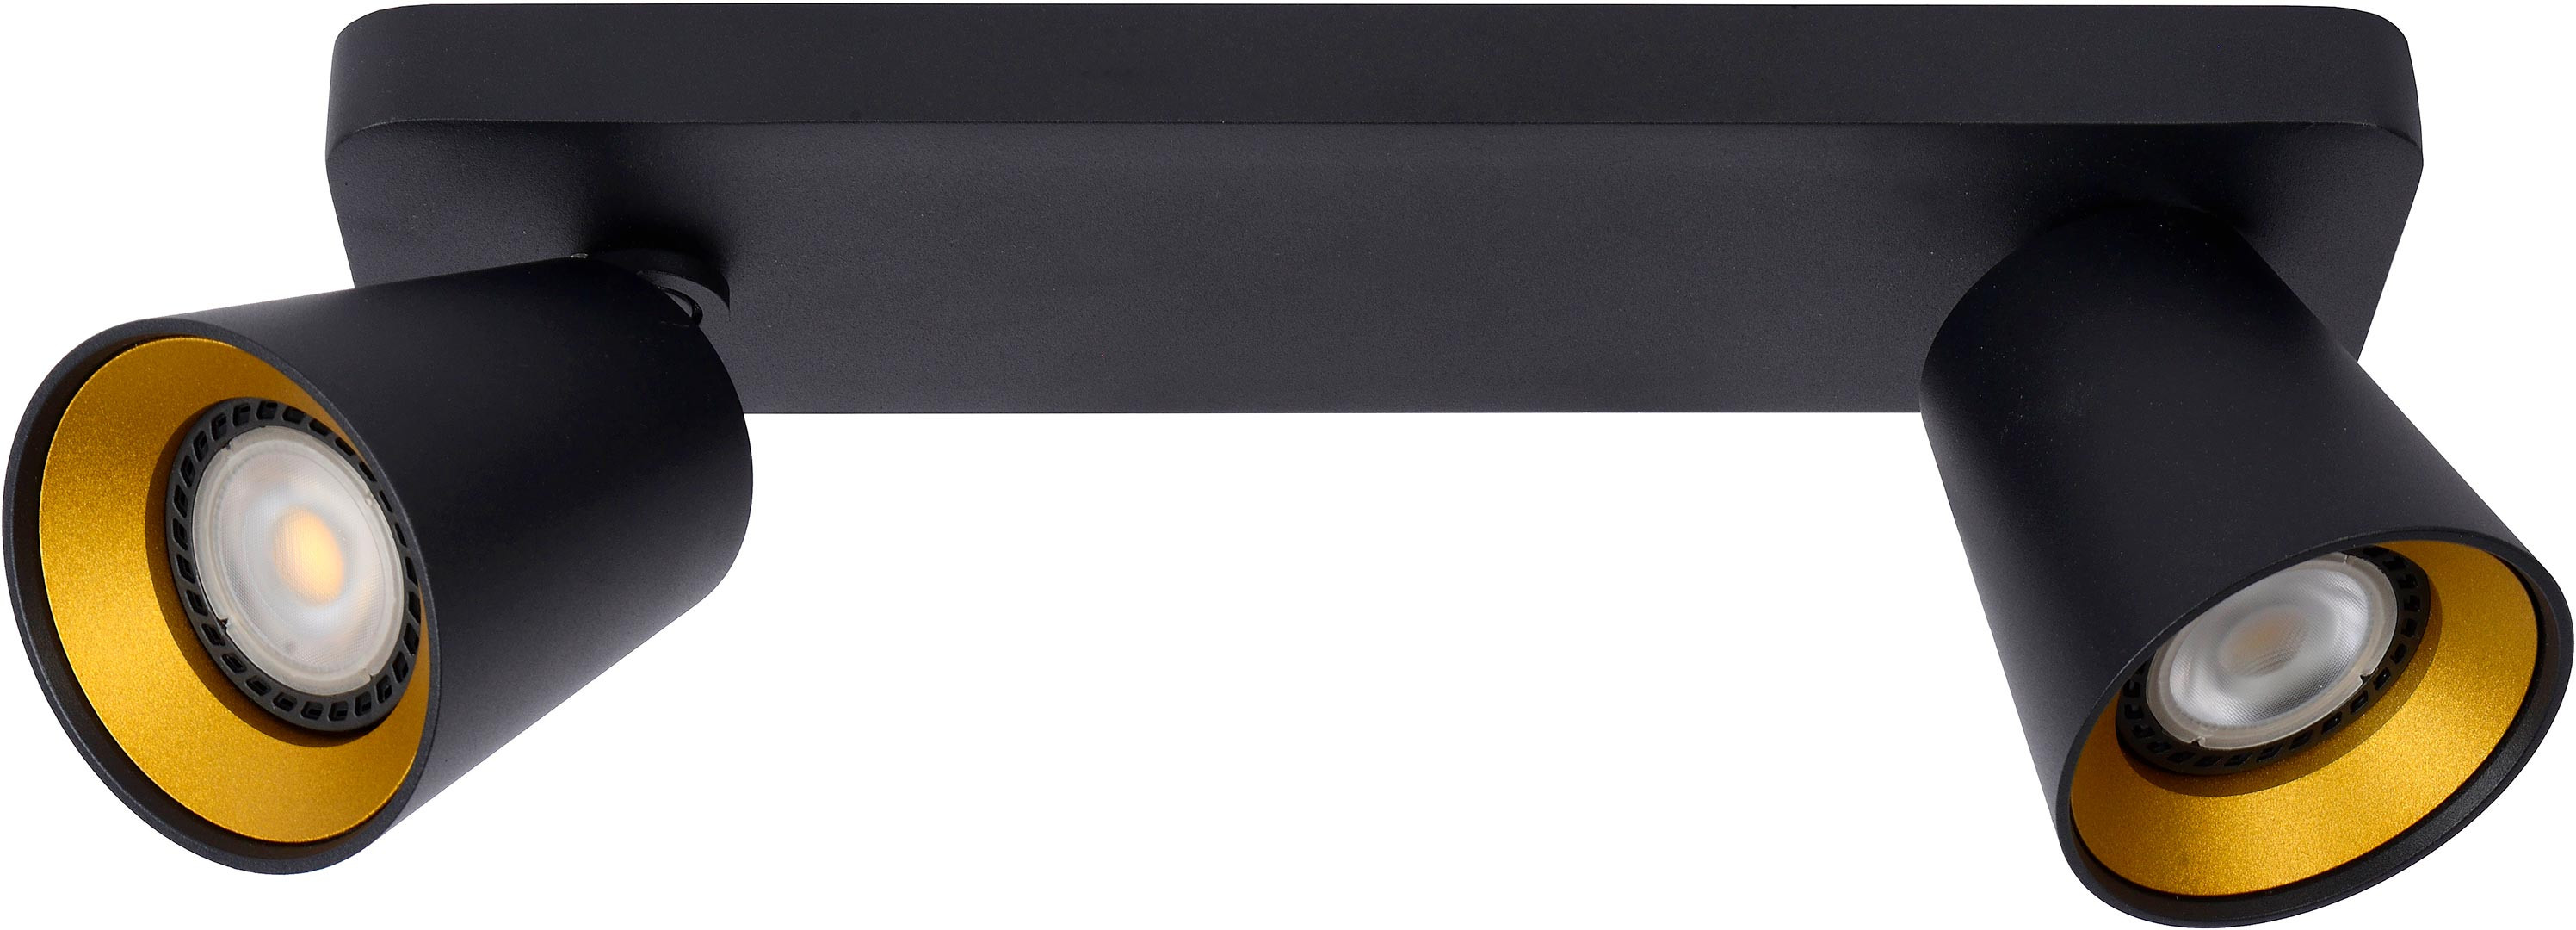 Spot plafond LED moderne noir Luiz